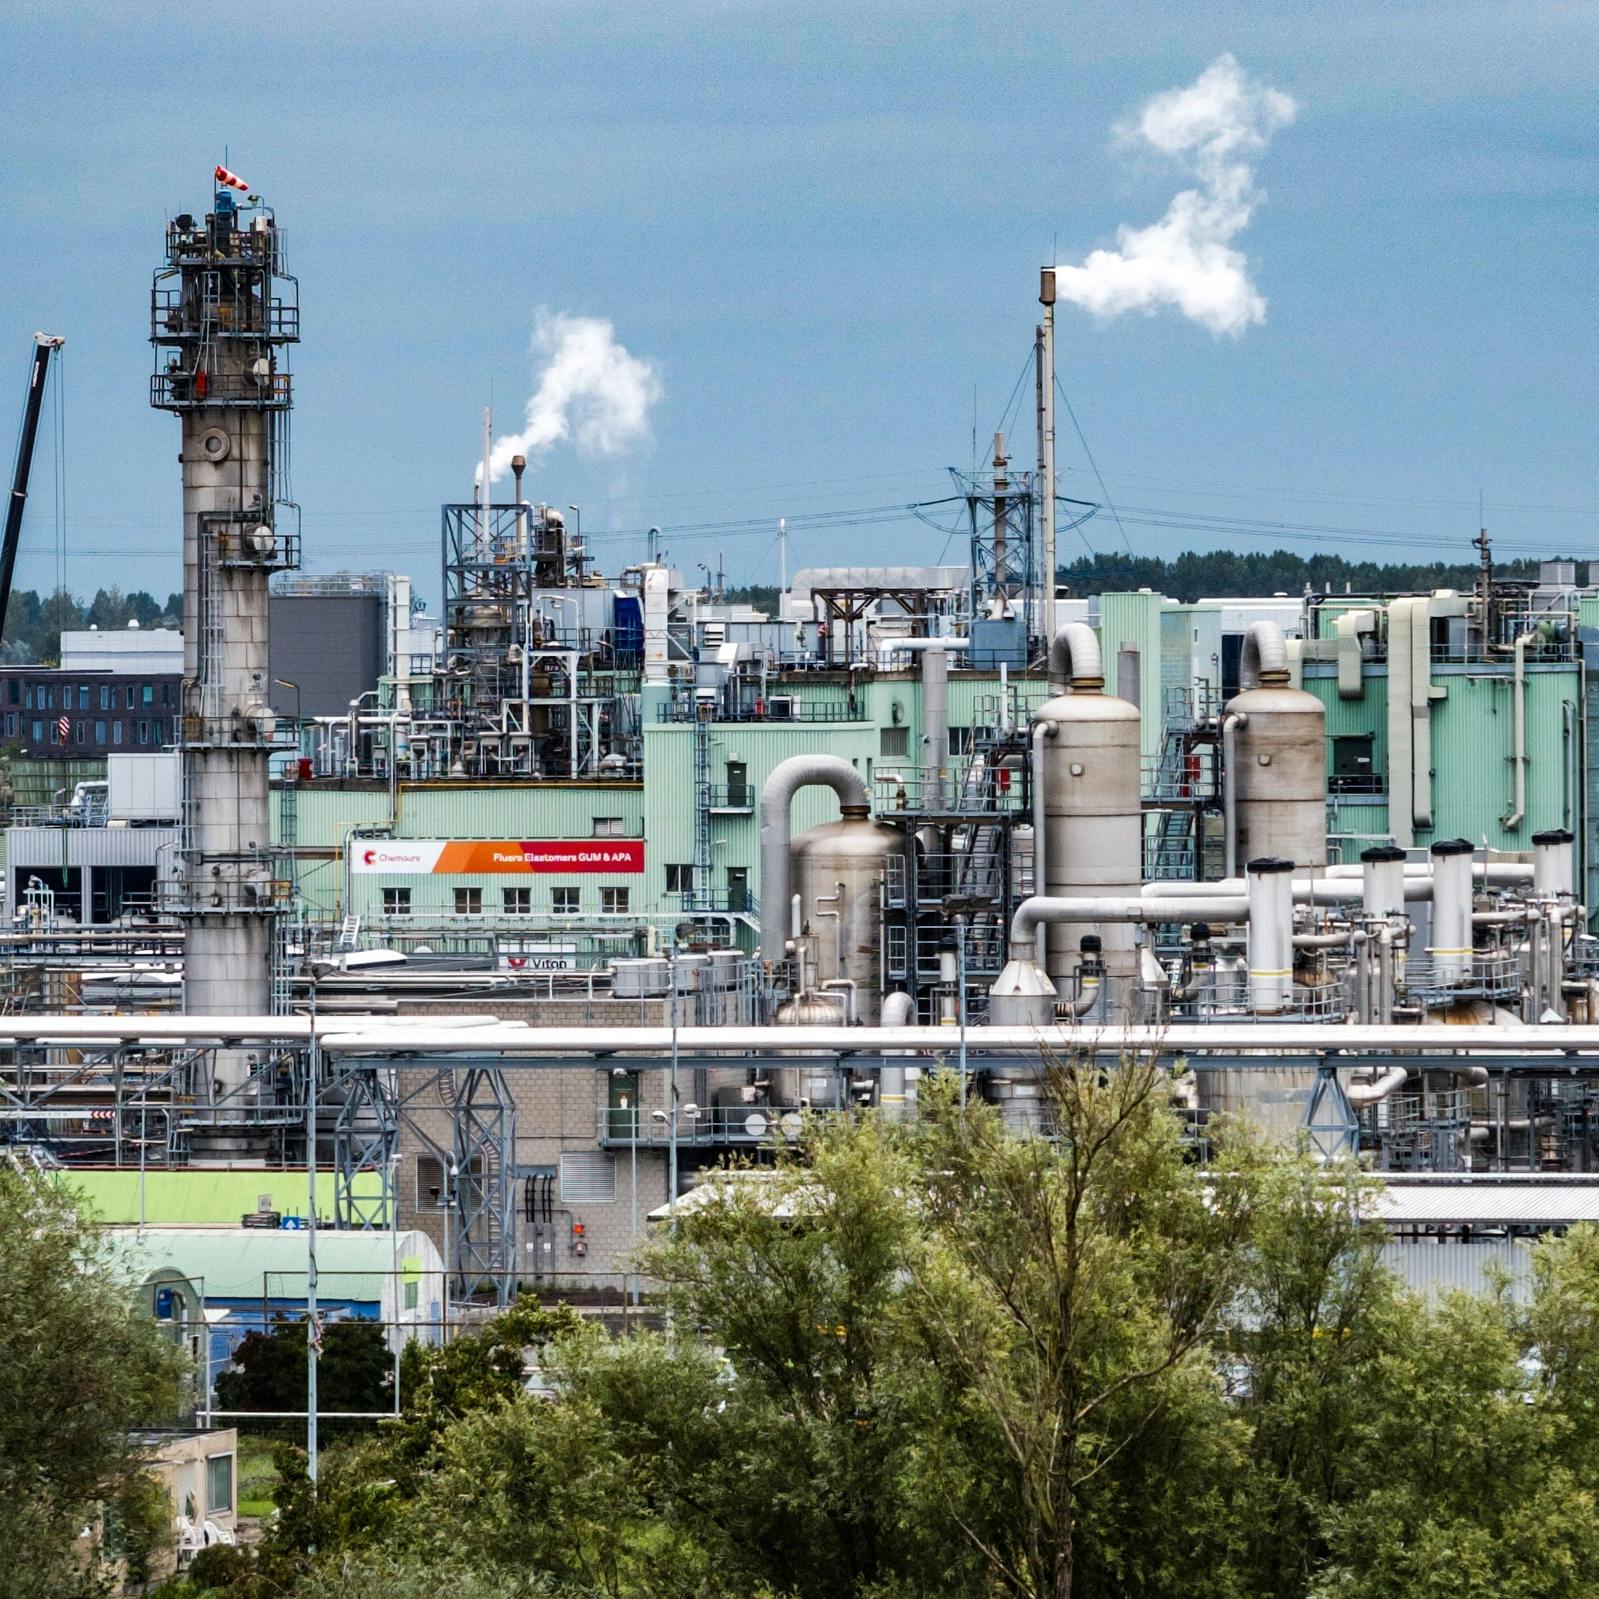 Brief van chemiebedrijf Chemours is 'ongepast, ongewenst en onjuist'